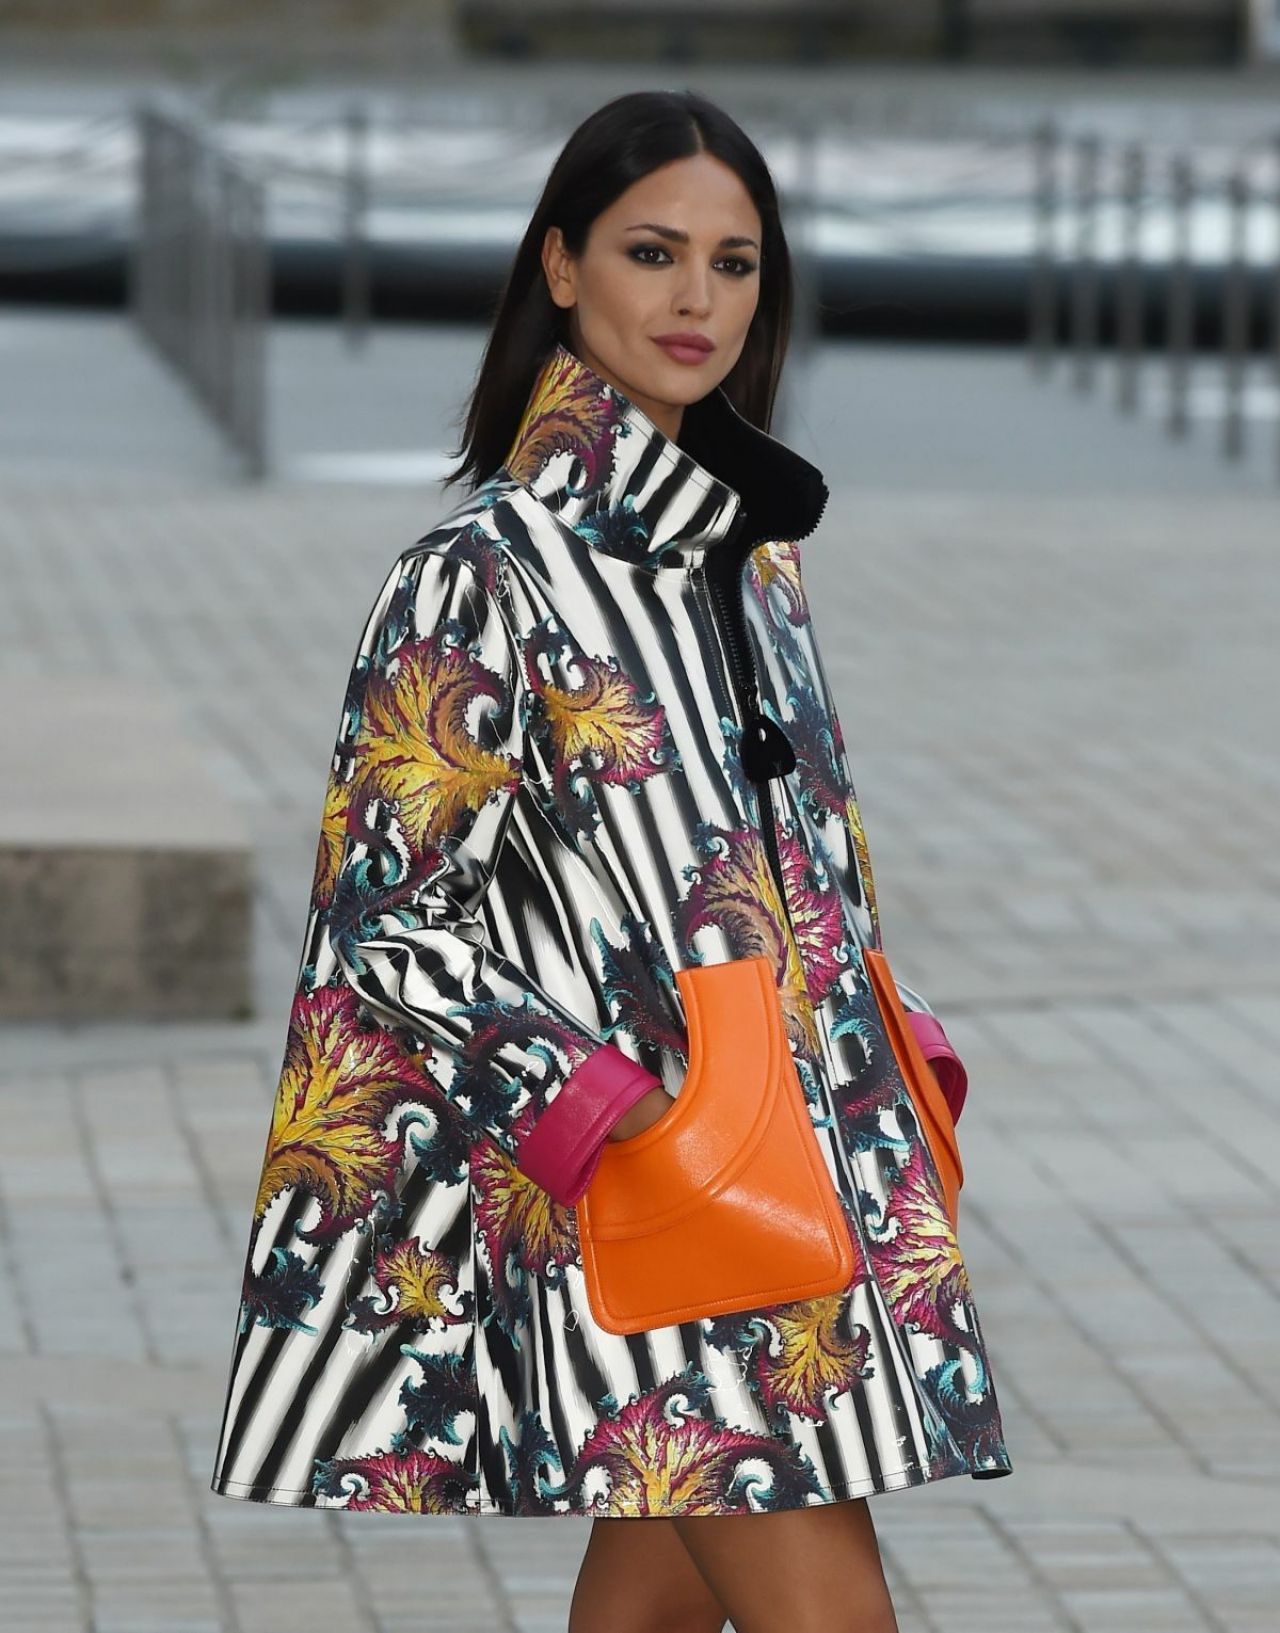 Eiza González praises Louis Vuitton's creative director